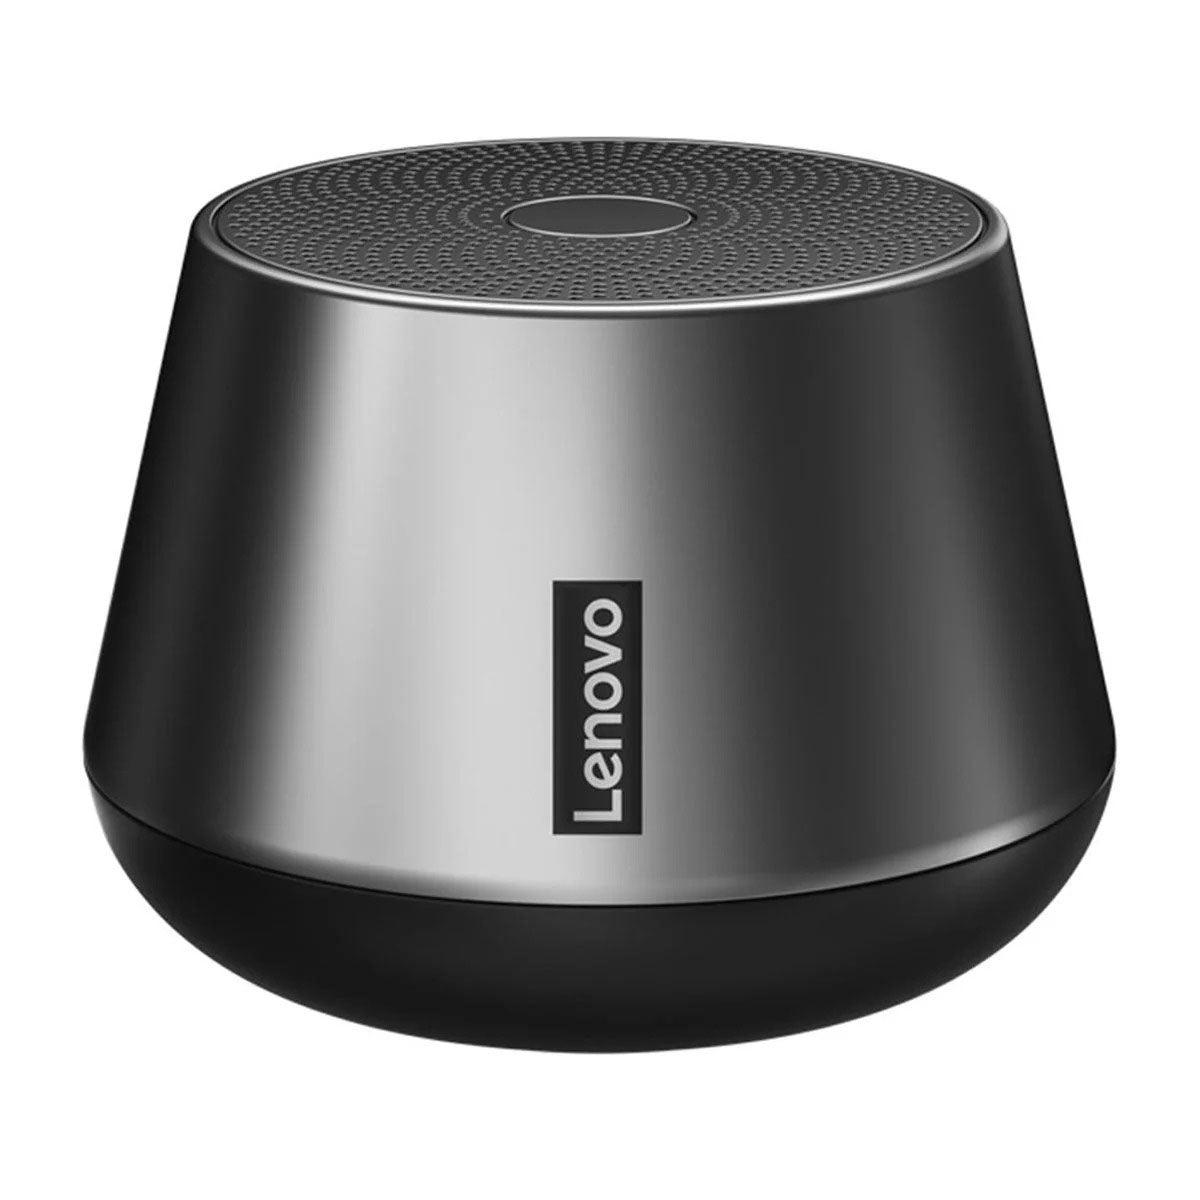 Lenovo K3 Pro Bluetooth Speaker